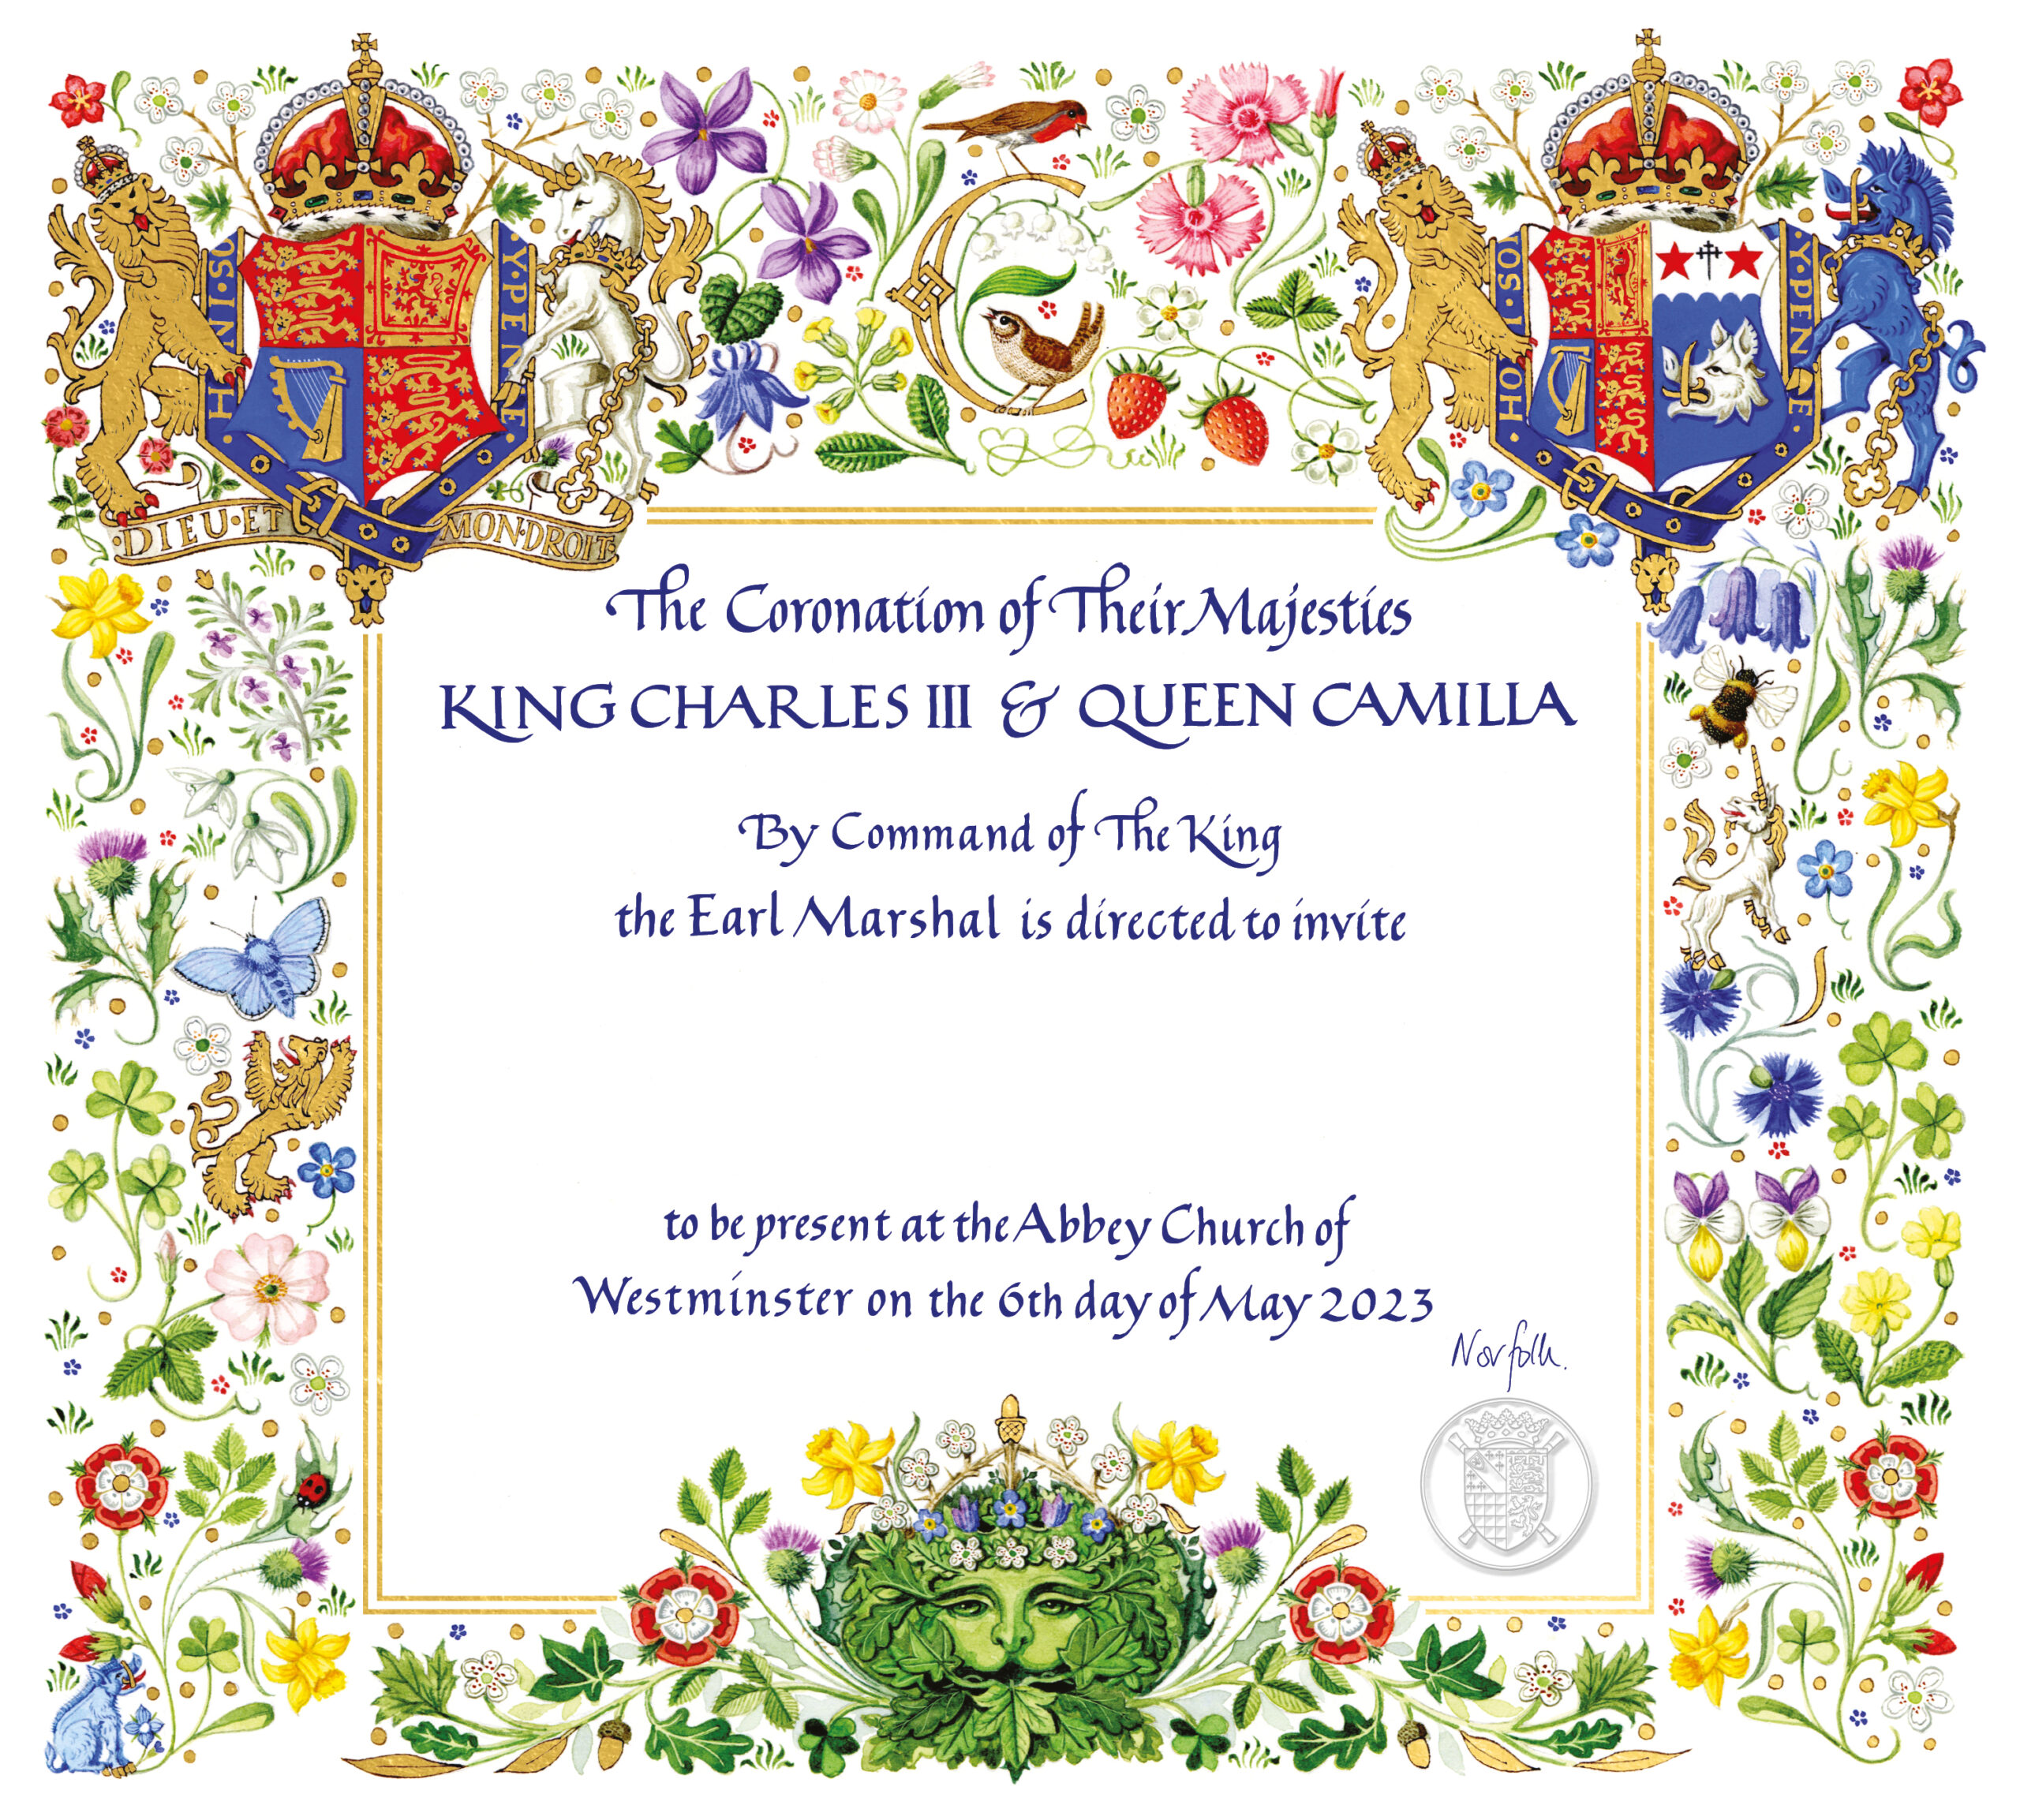 A decorative invitation to the King's Coronation